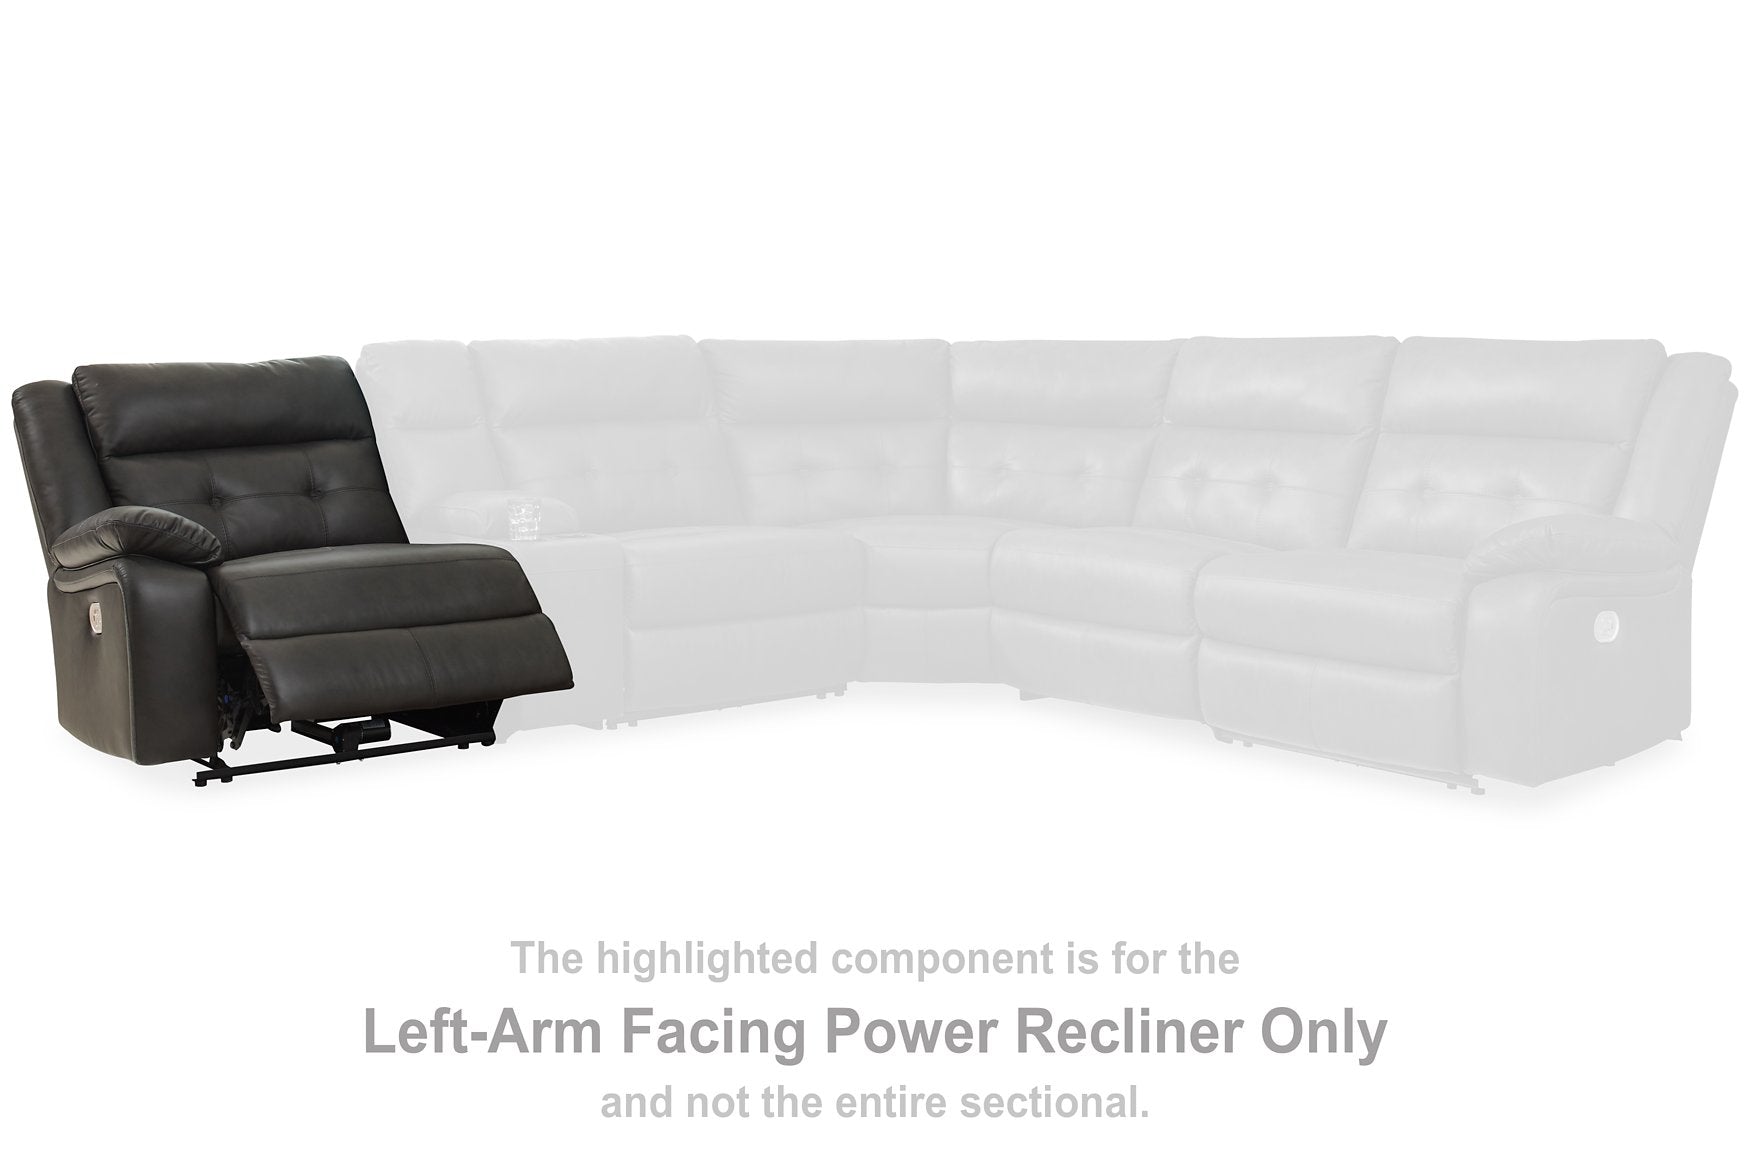 Mackie Pike 3-Piece Power Reclining Sectional Sofa - Half Price Furniture